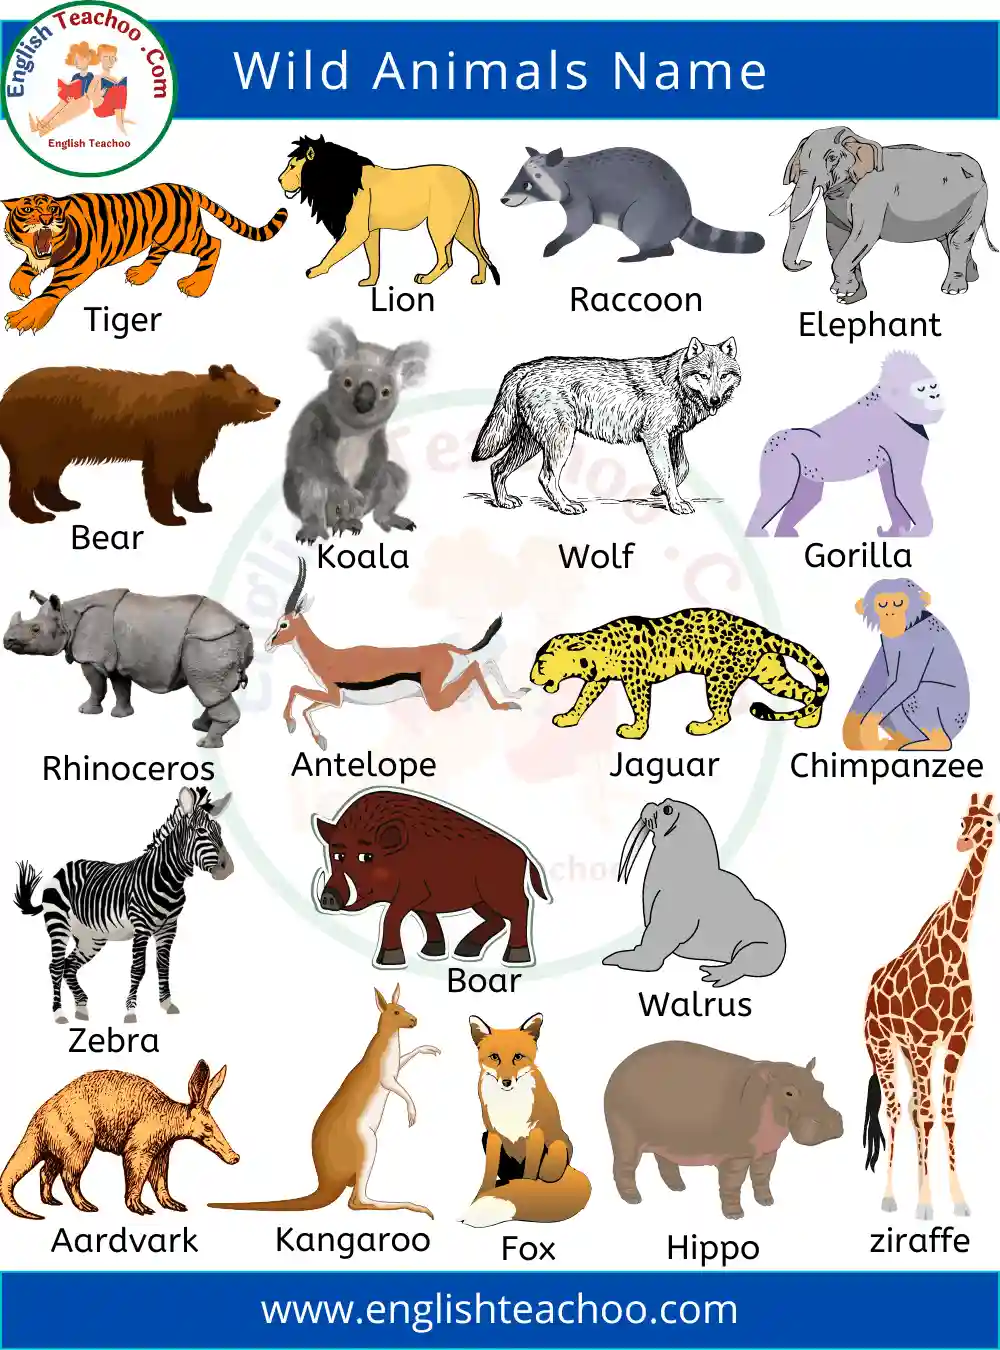 List of Wild Animals Name With Pictures - EnglishTeachoo